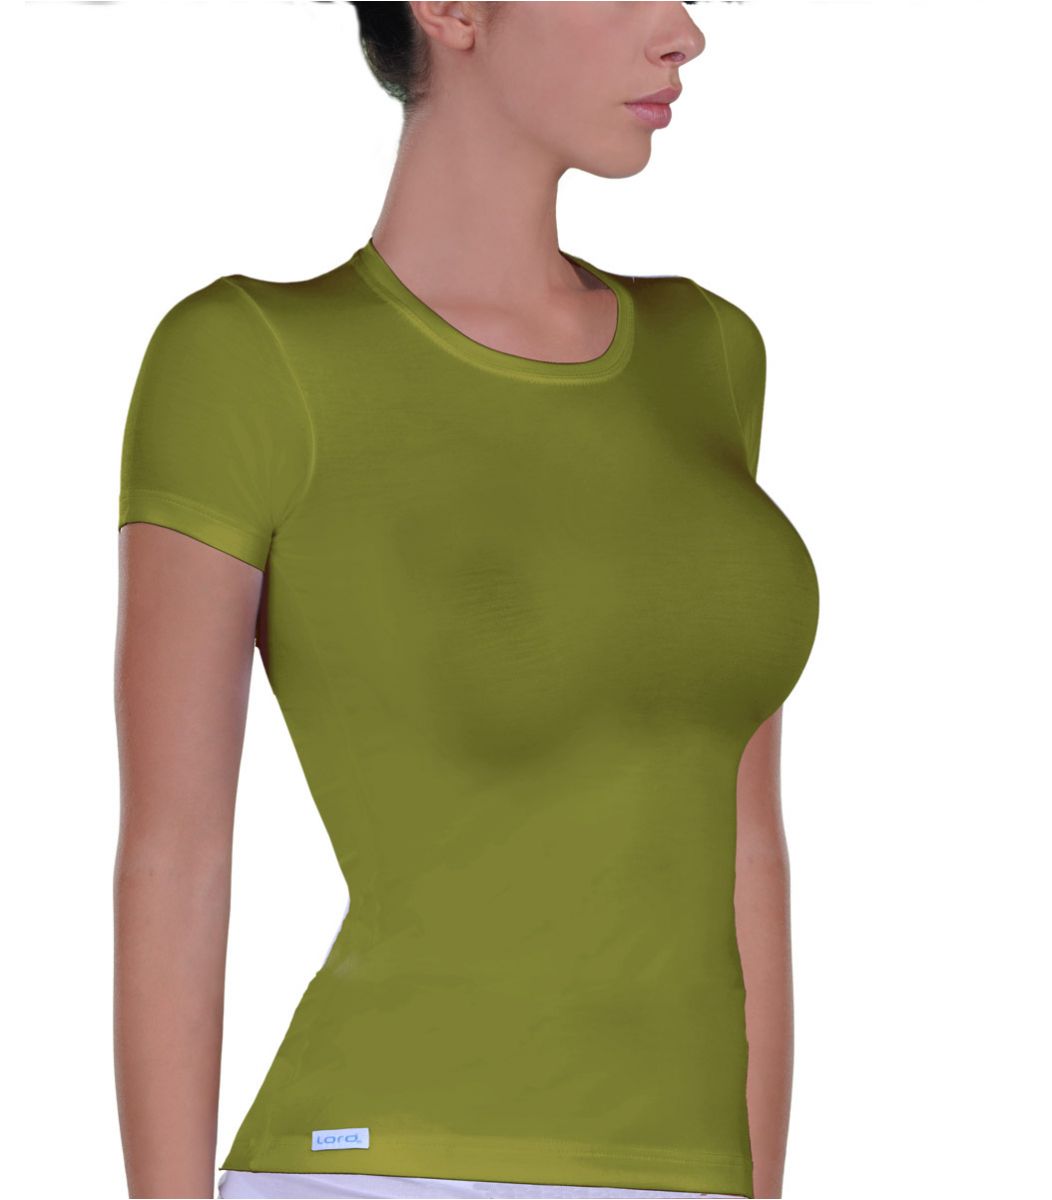 Women elastic T-Shirt, green